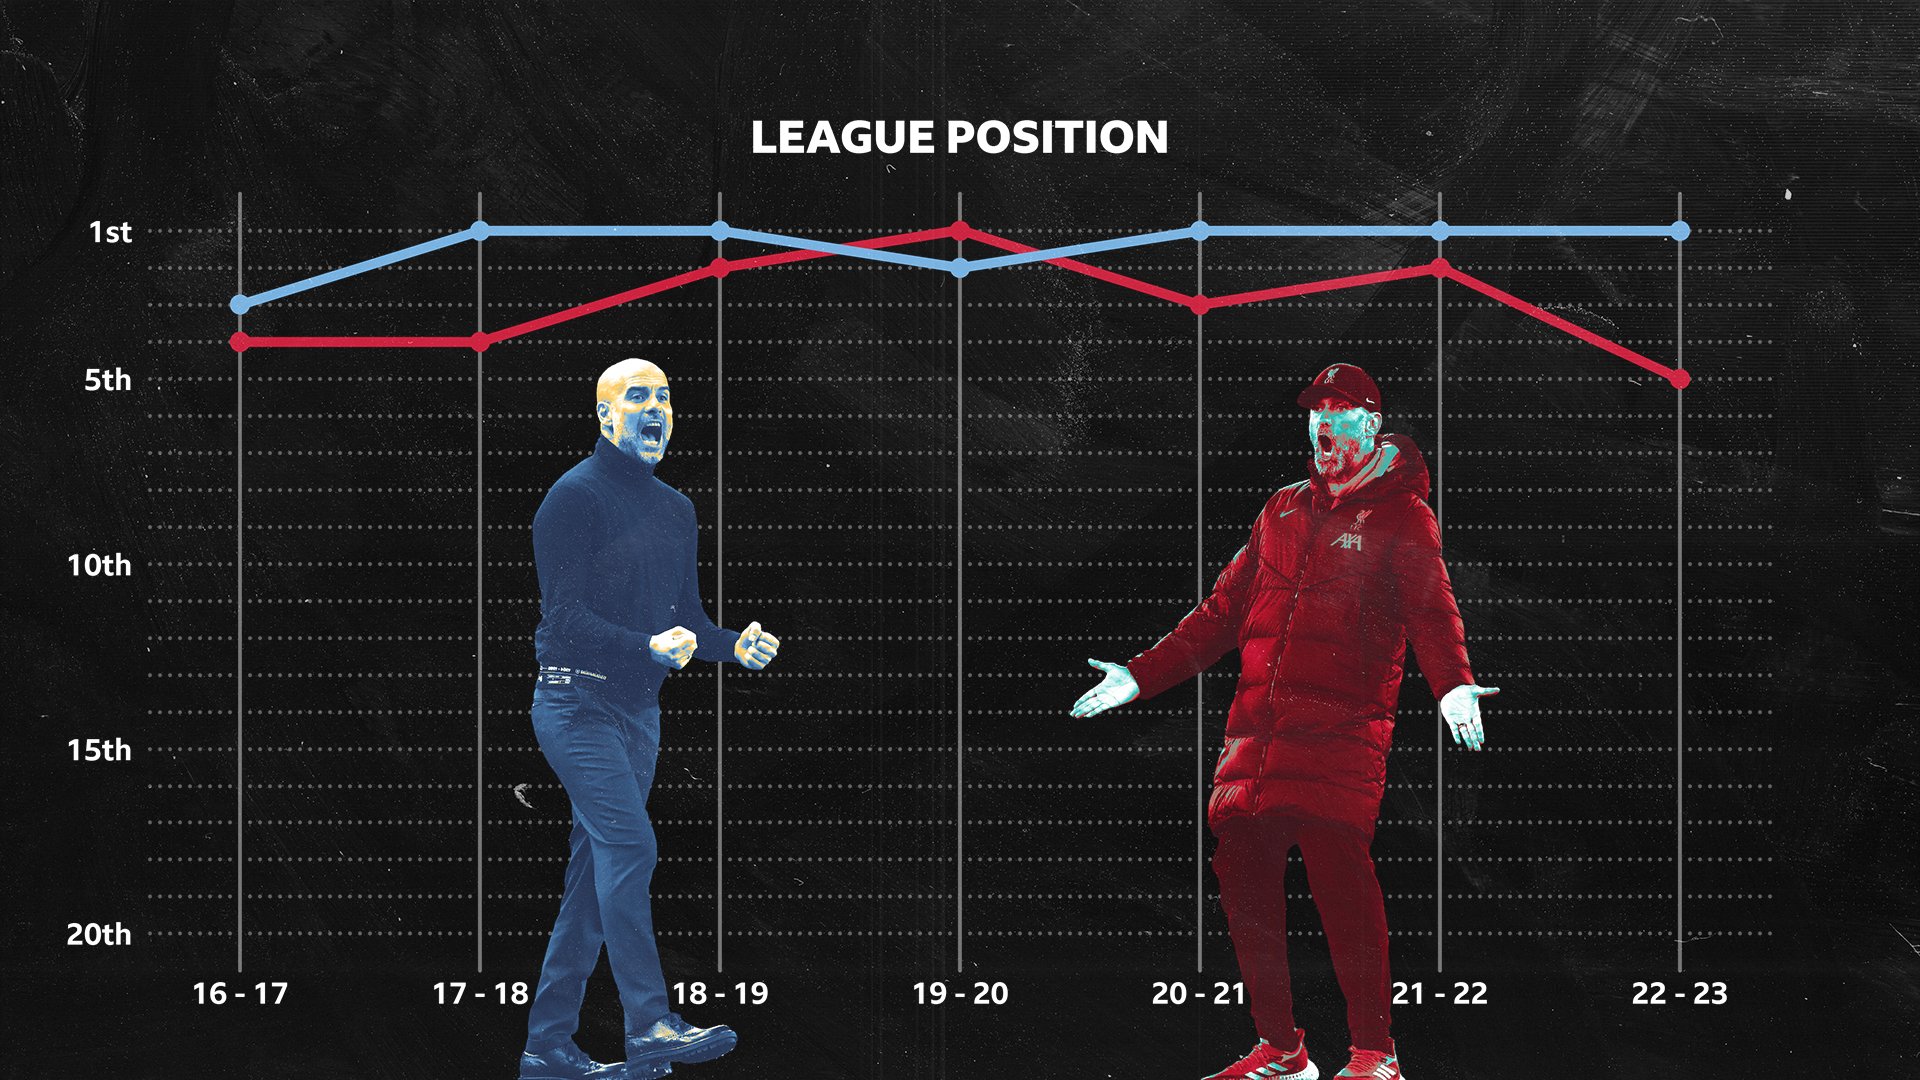 Pep Guardiola and Jurgen Klopp's league positions in England